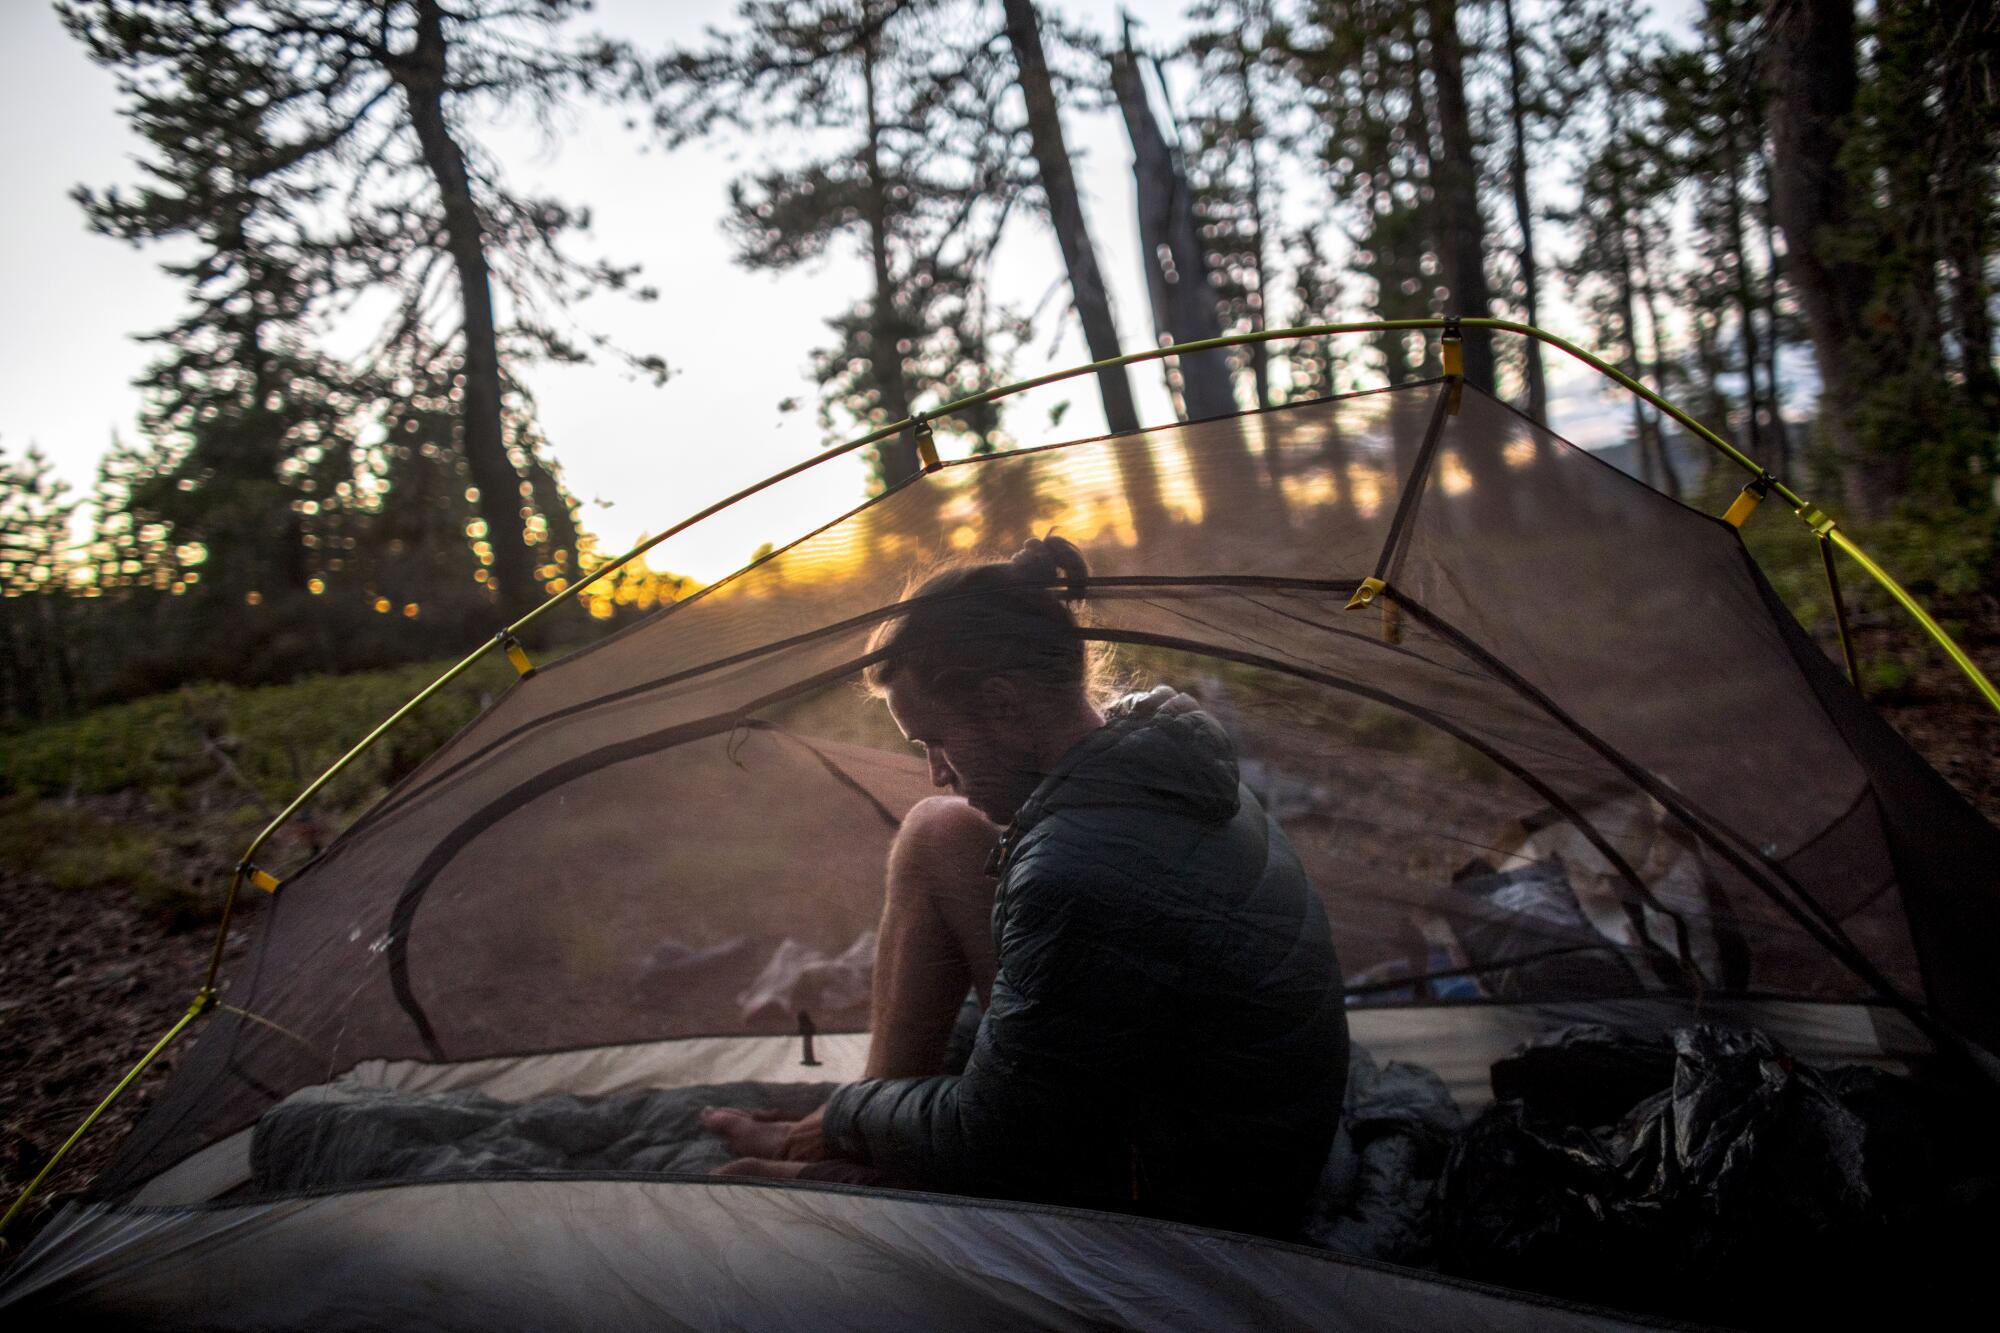 As dusk settles in, Sammy Potter rubs his feet inside his one-man tent.